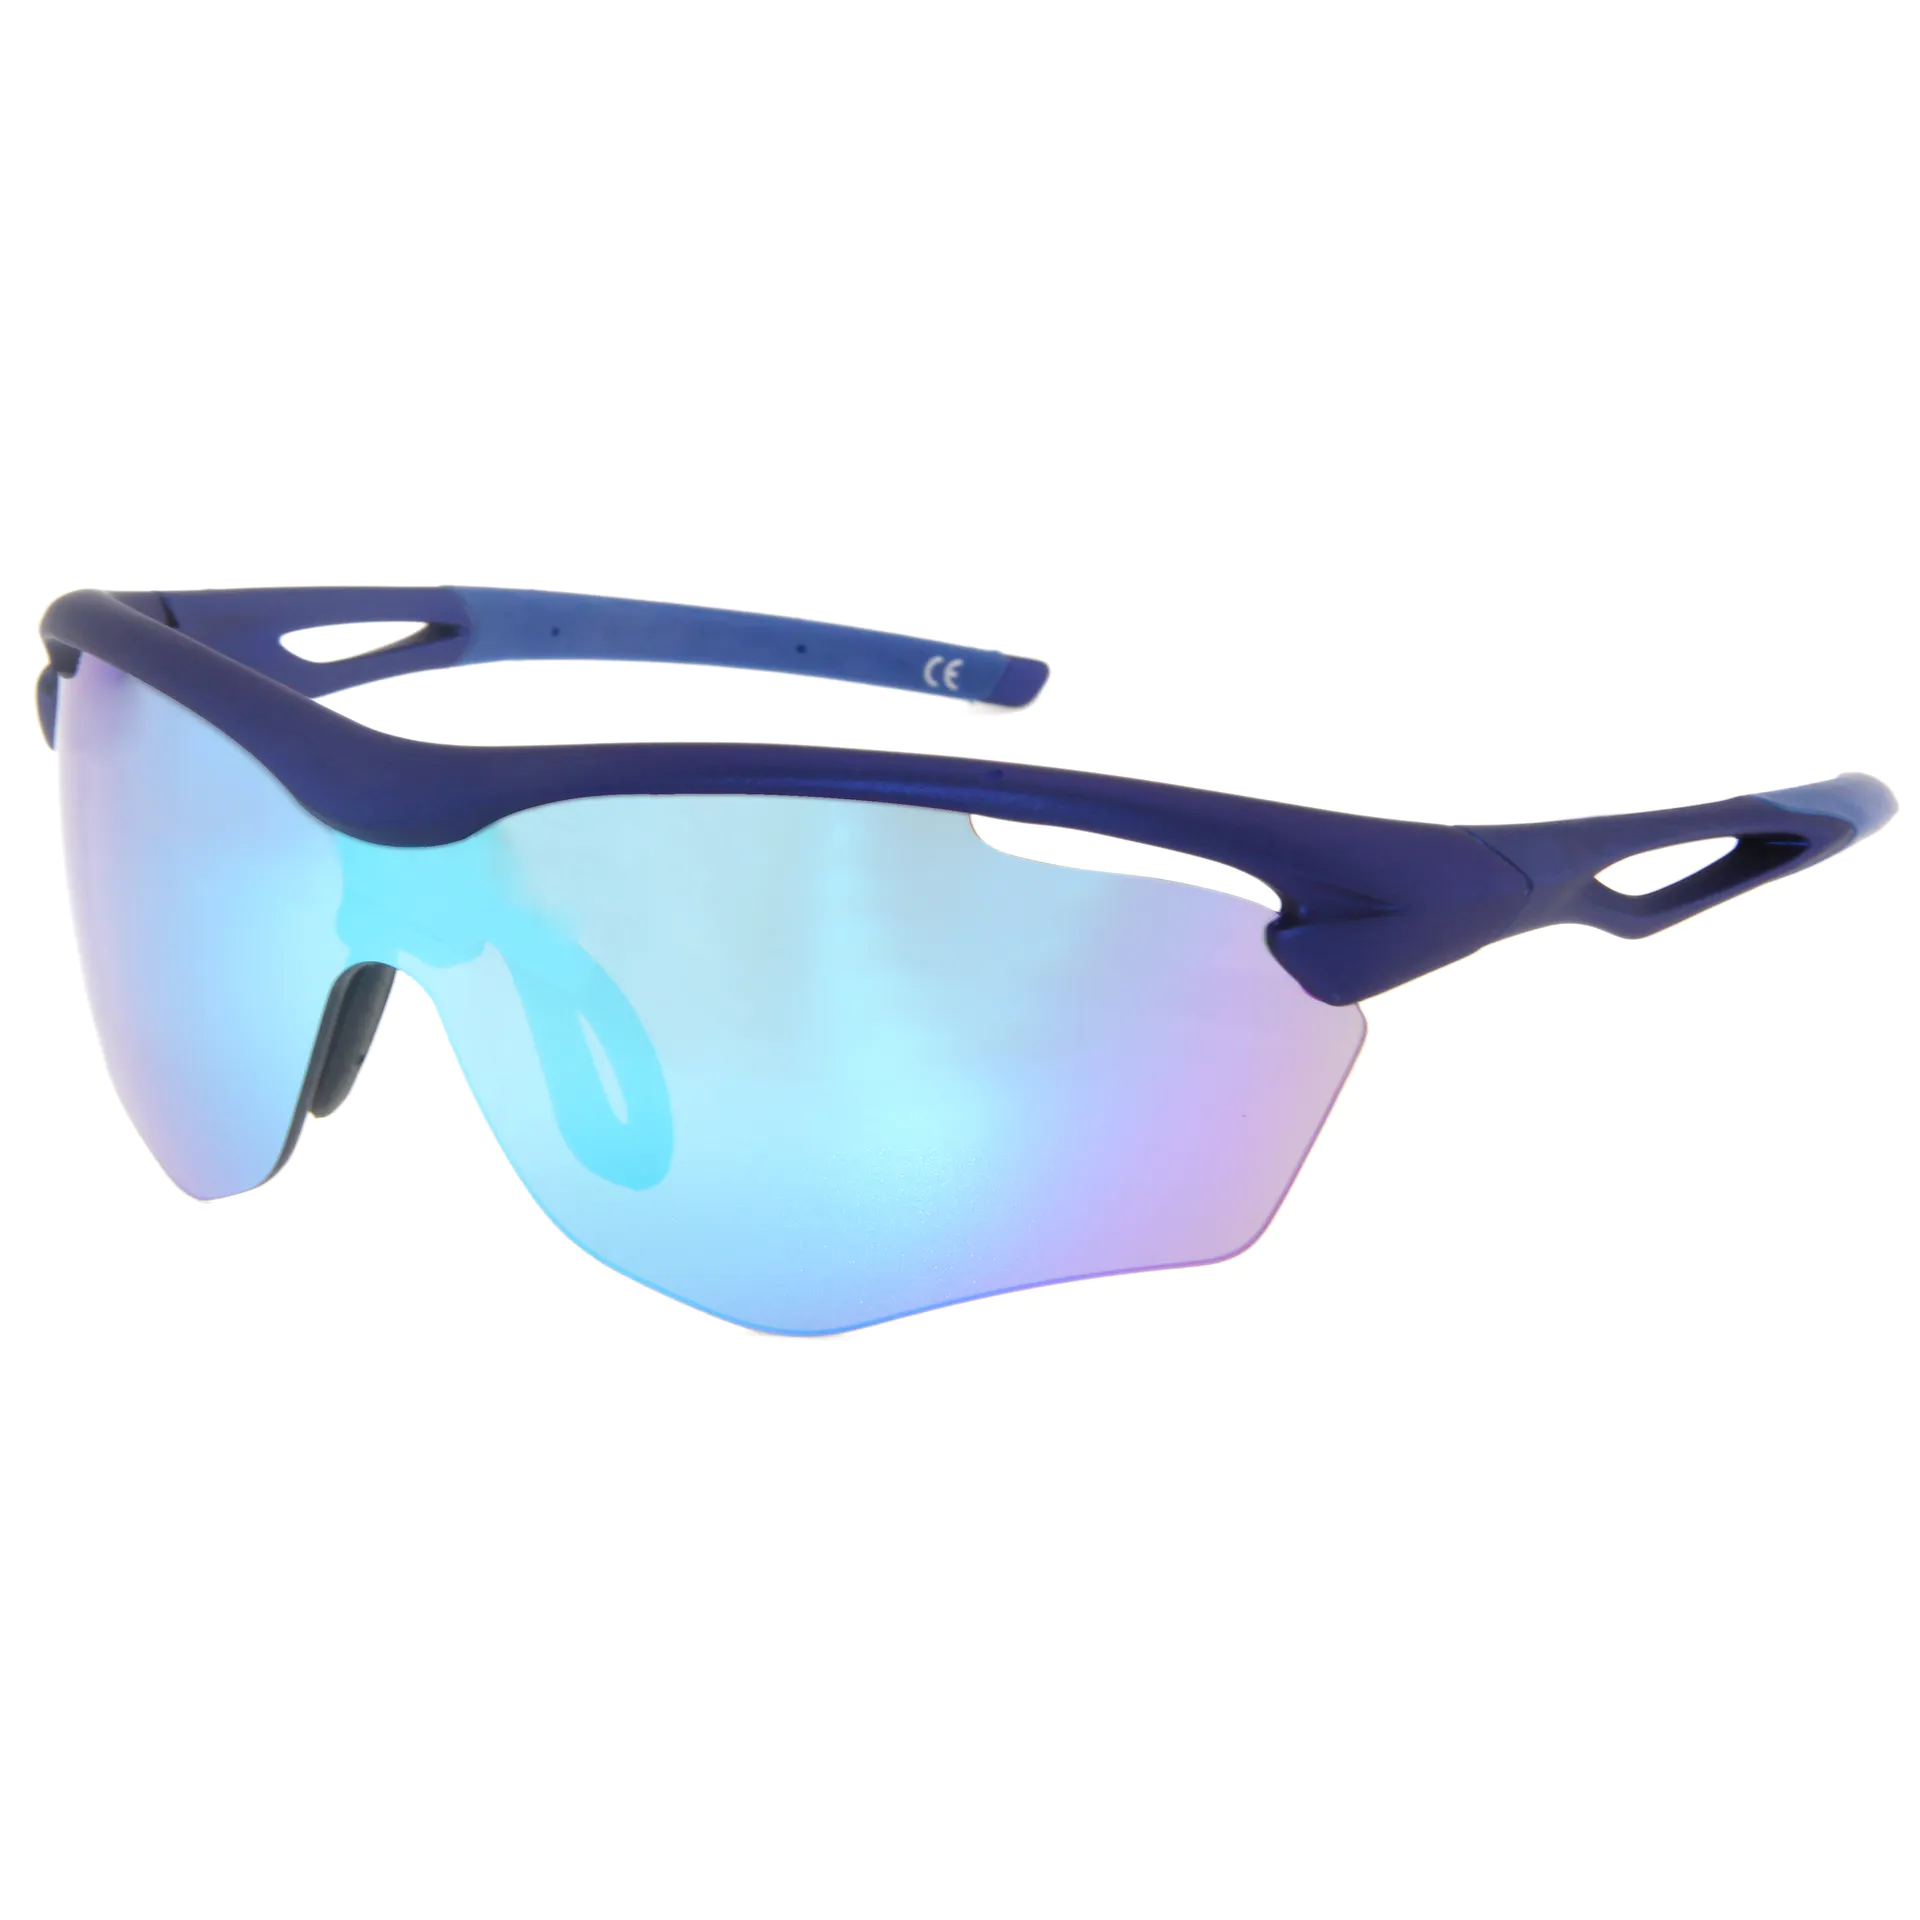 EUGENIA OEM Custom Logo Mirror Lens Cycling Fishing Sport Sunglasses Polarized UV400 Protection